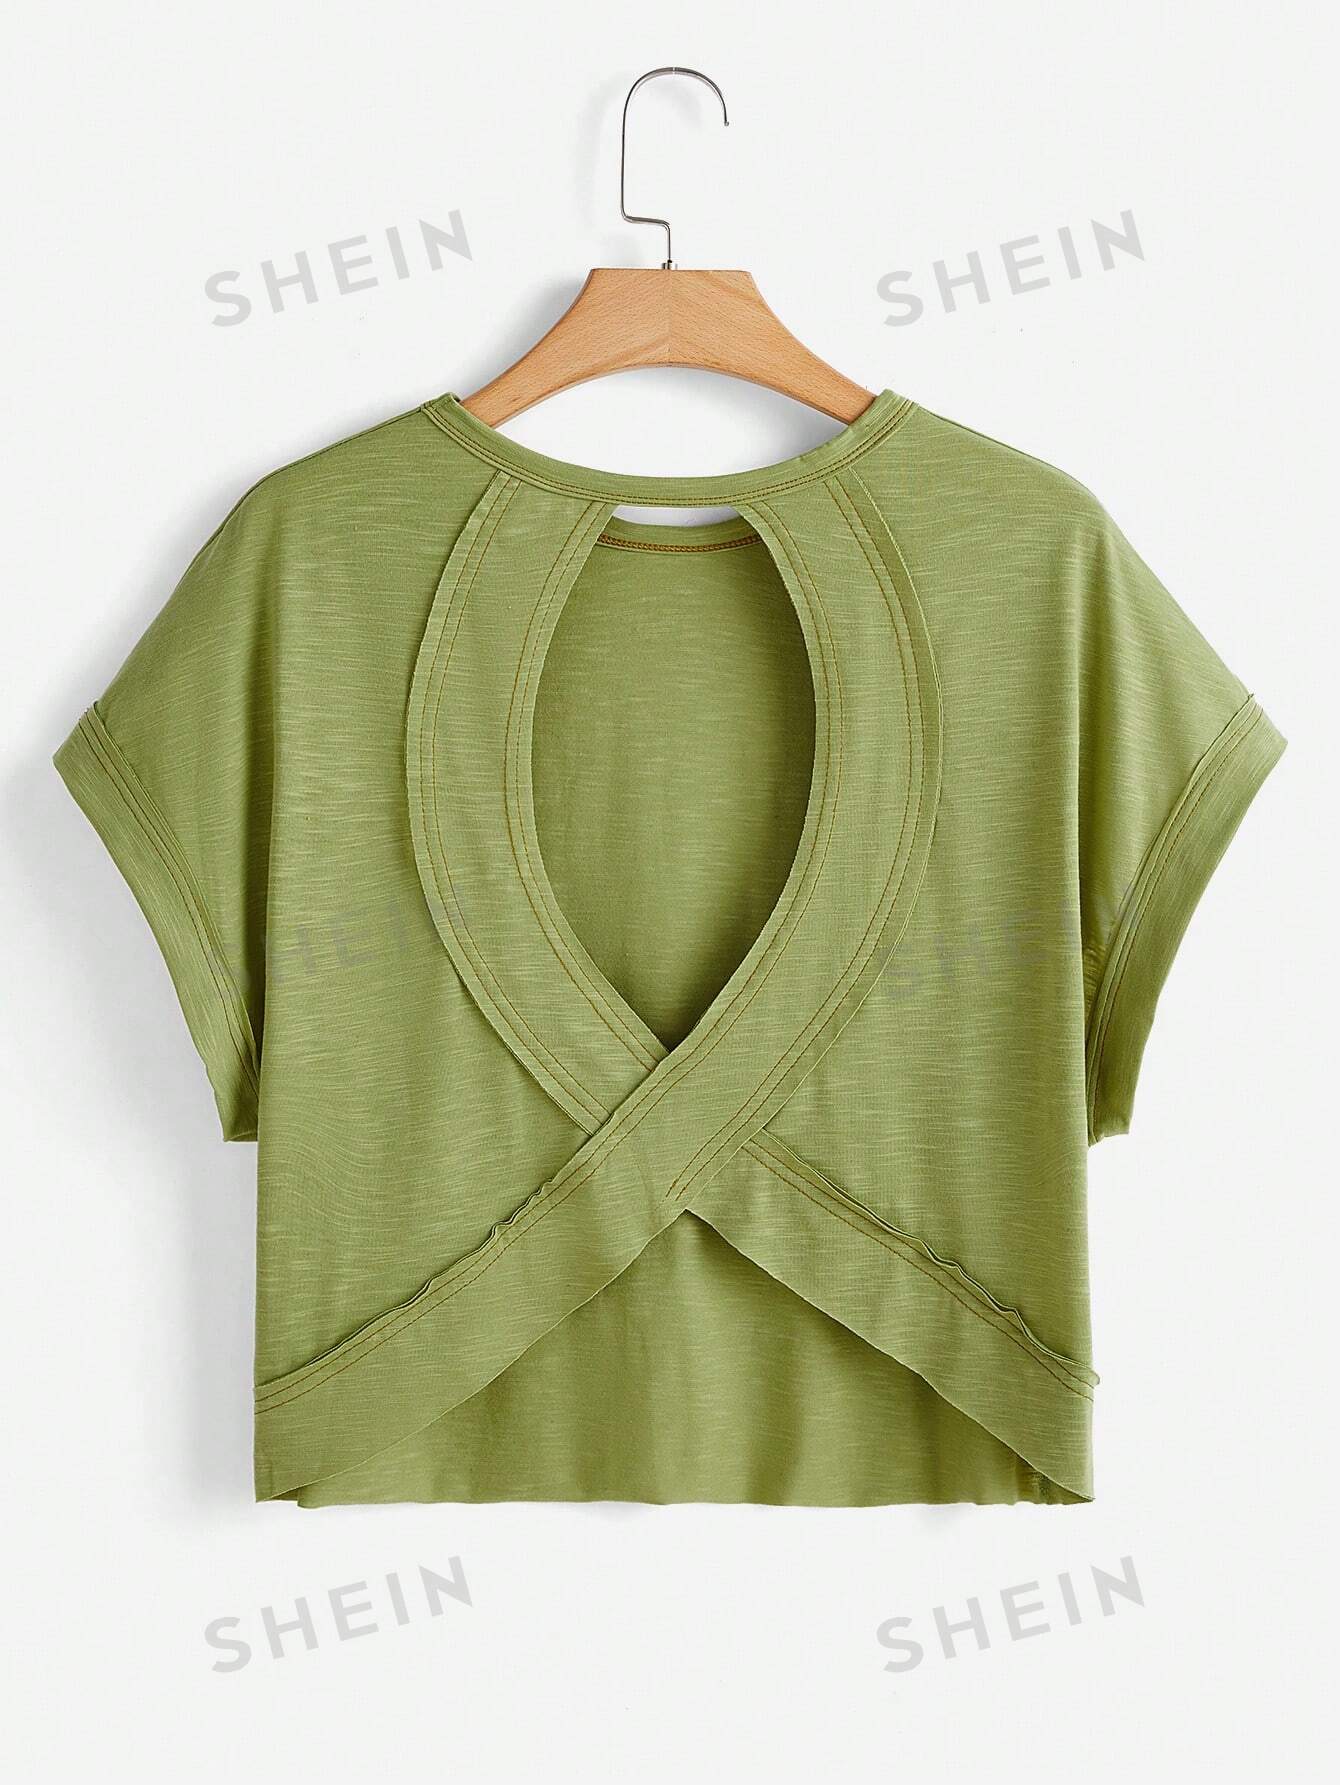 SHEIN Essnce Женская однотонная футболка с рукавами «летучая мышь» и открытой спиной, зеленый pierre cardın women back low cut ruched nightgown